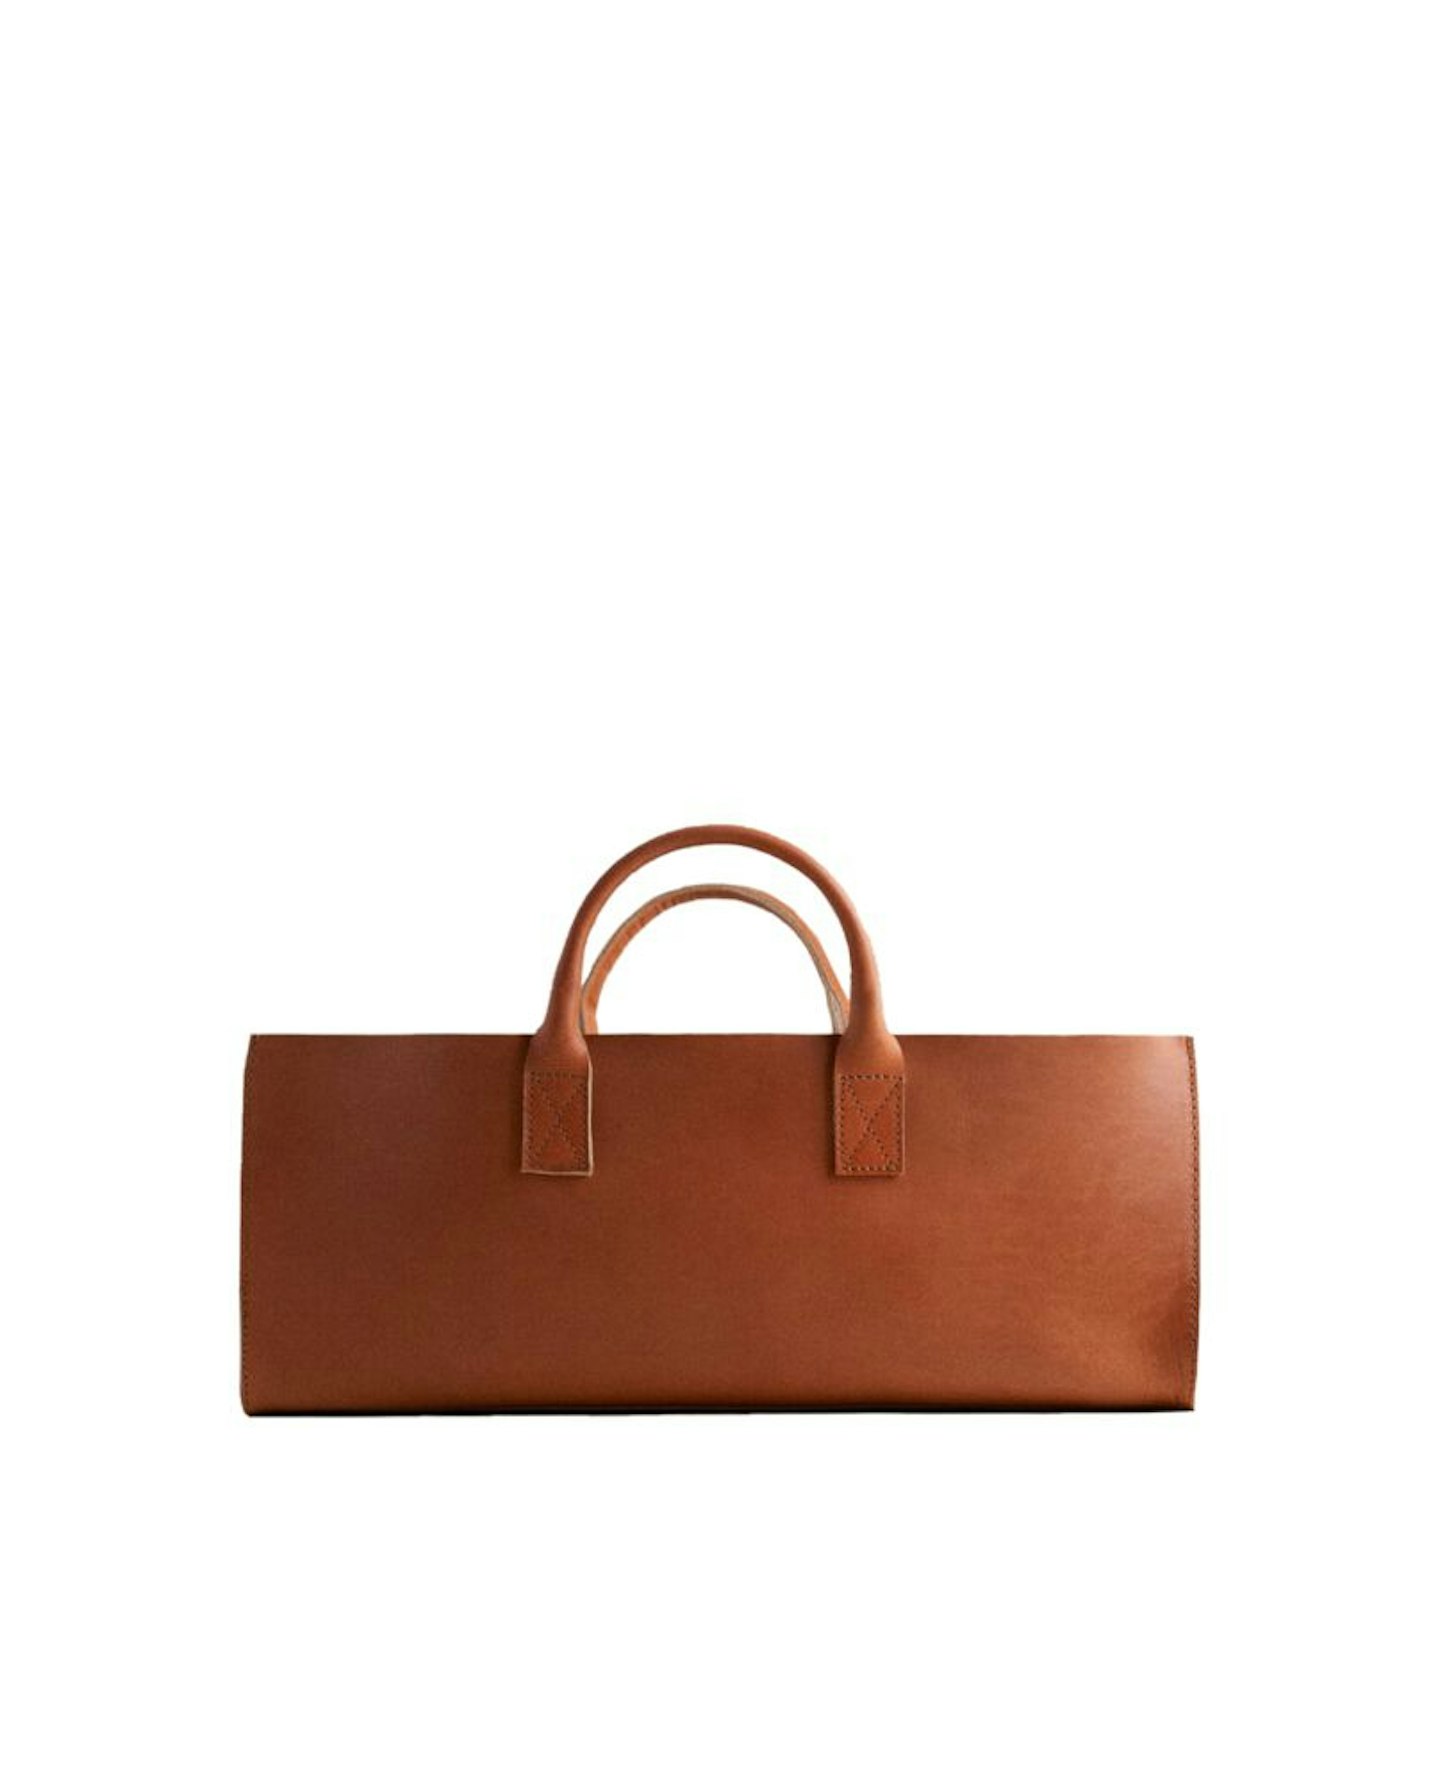 Zara, Leather Harvest Bag, £119